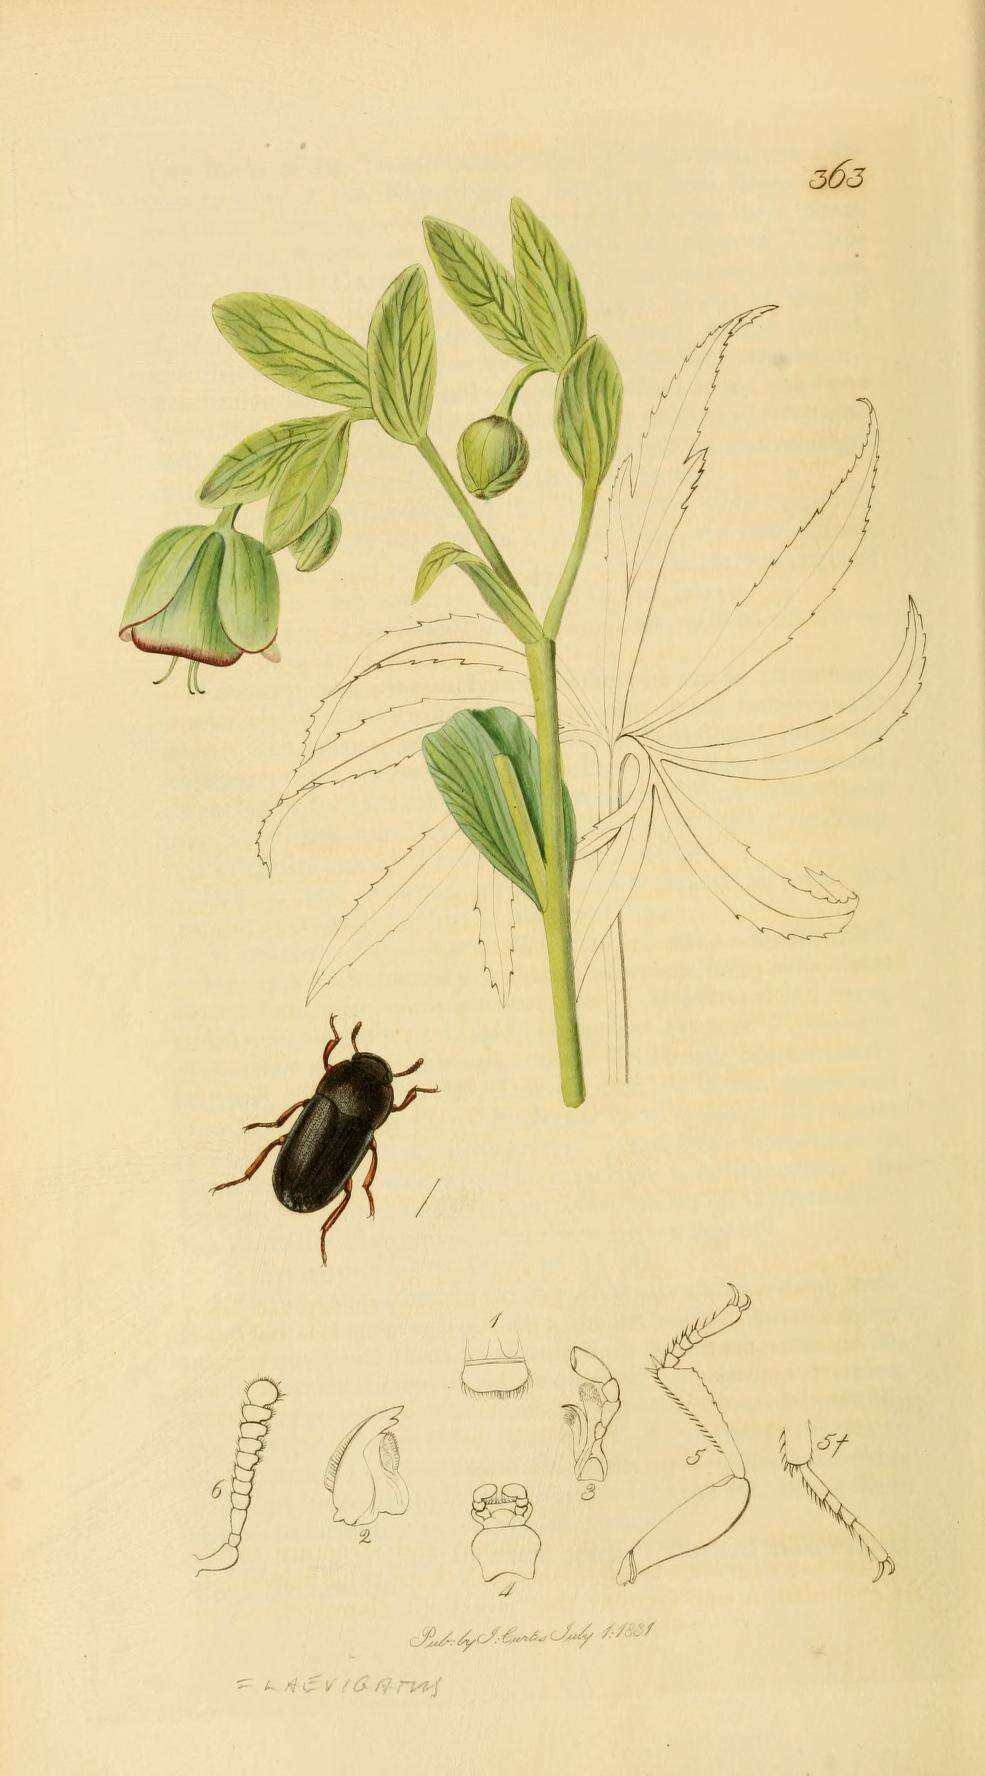 Image of Black fungus beetle